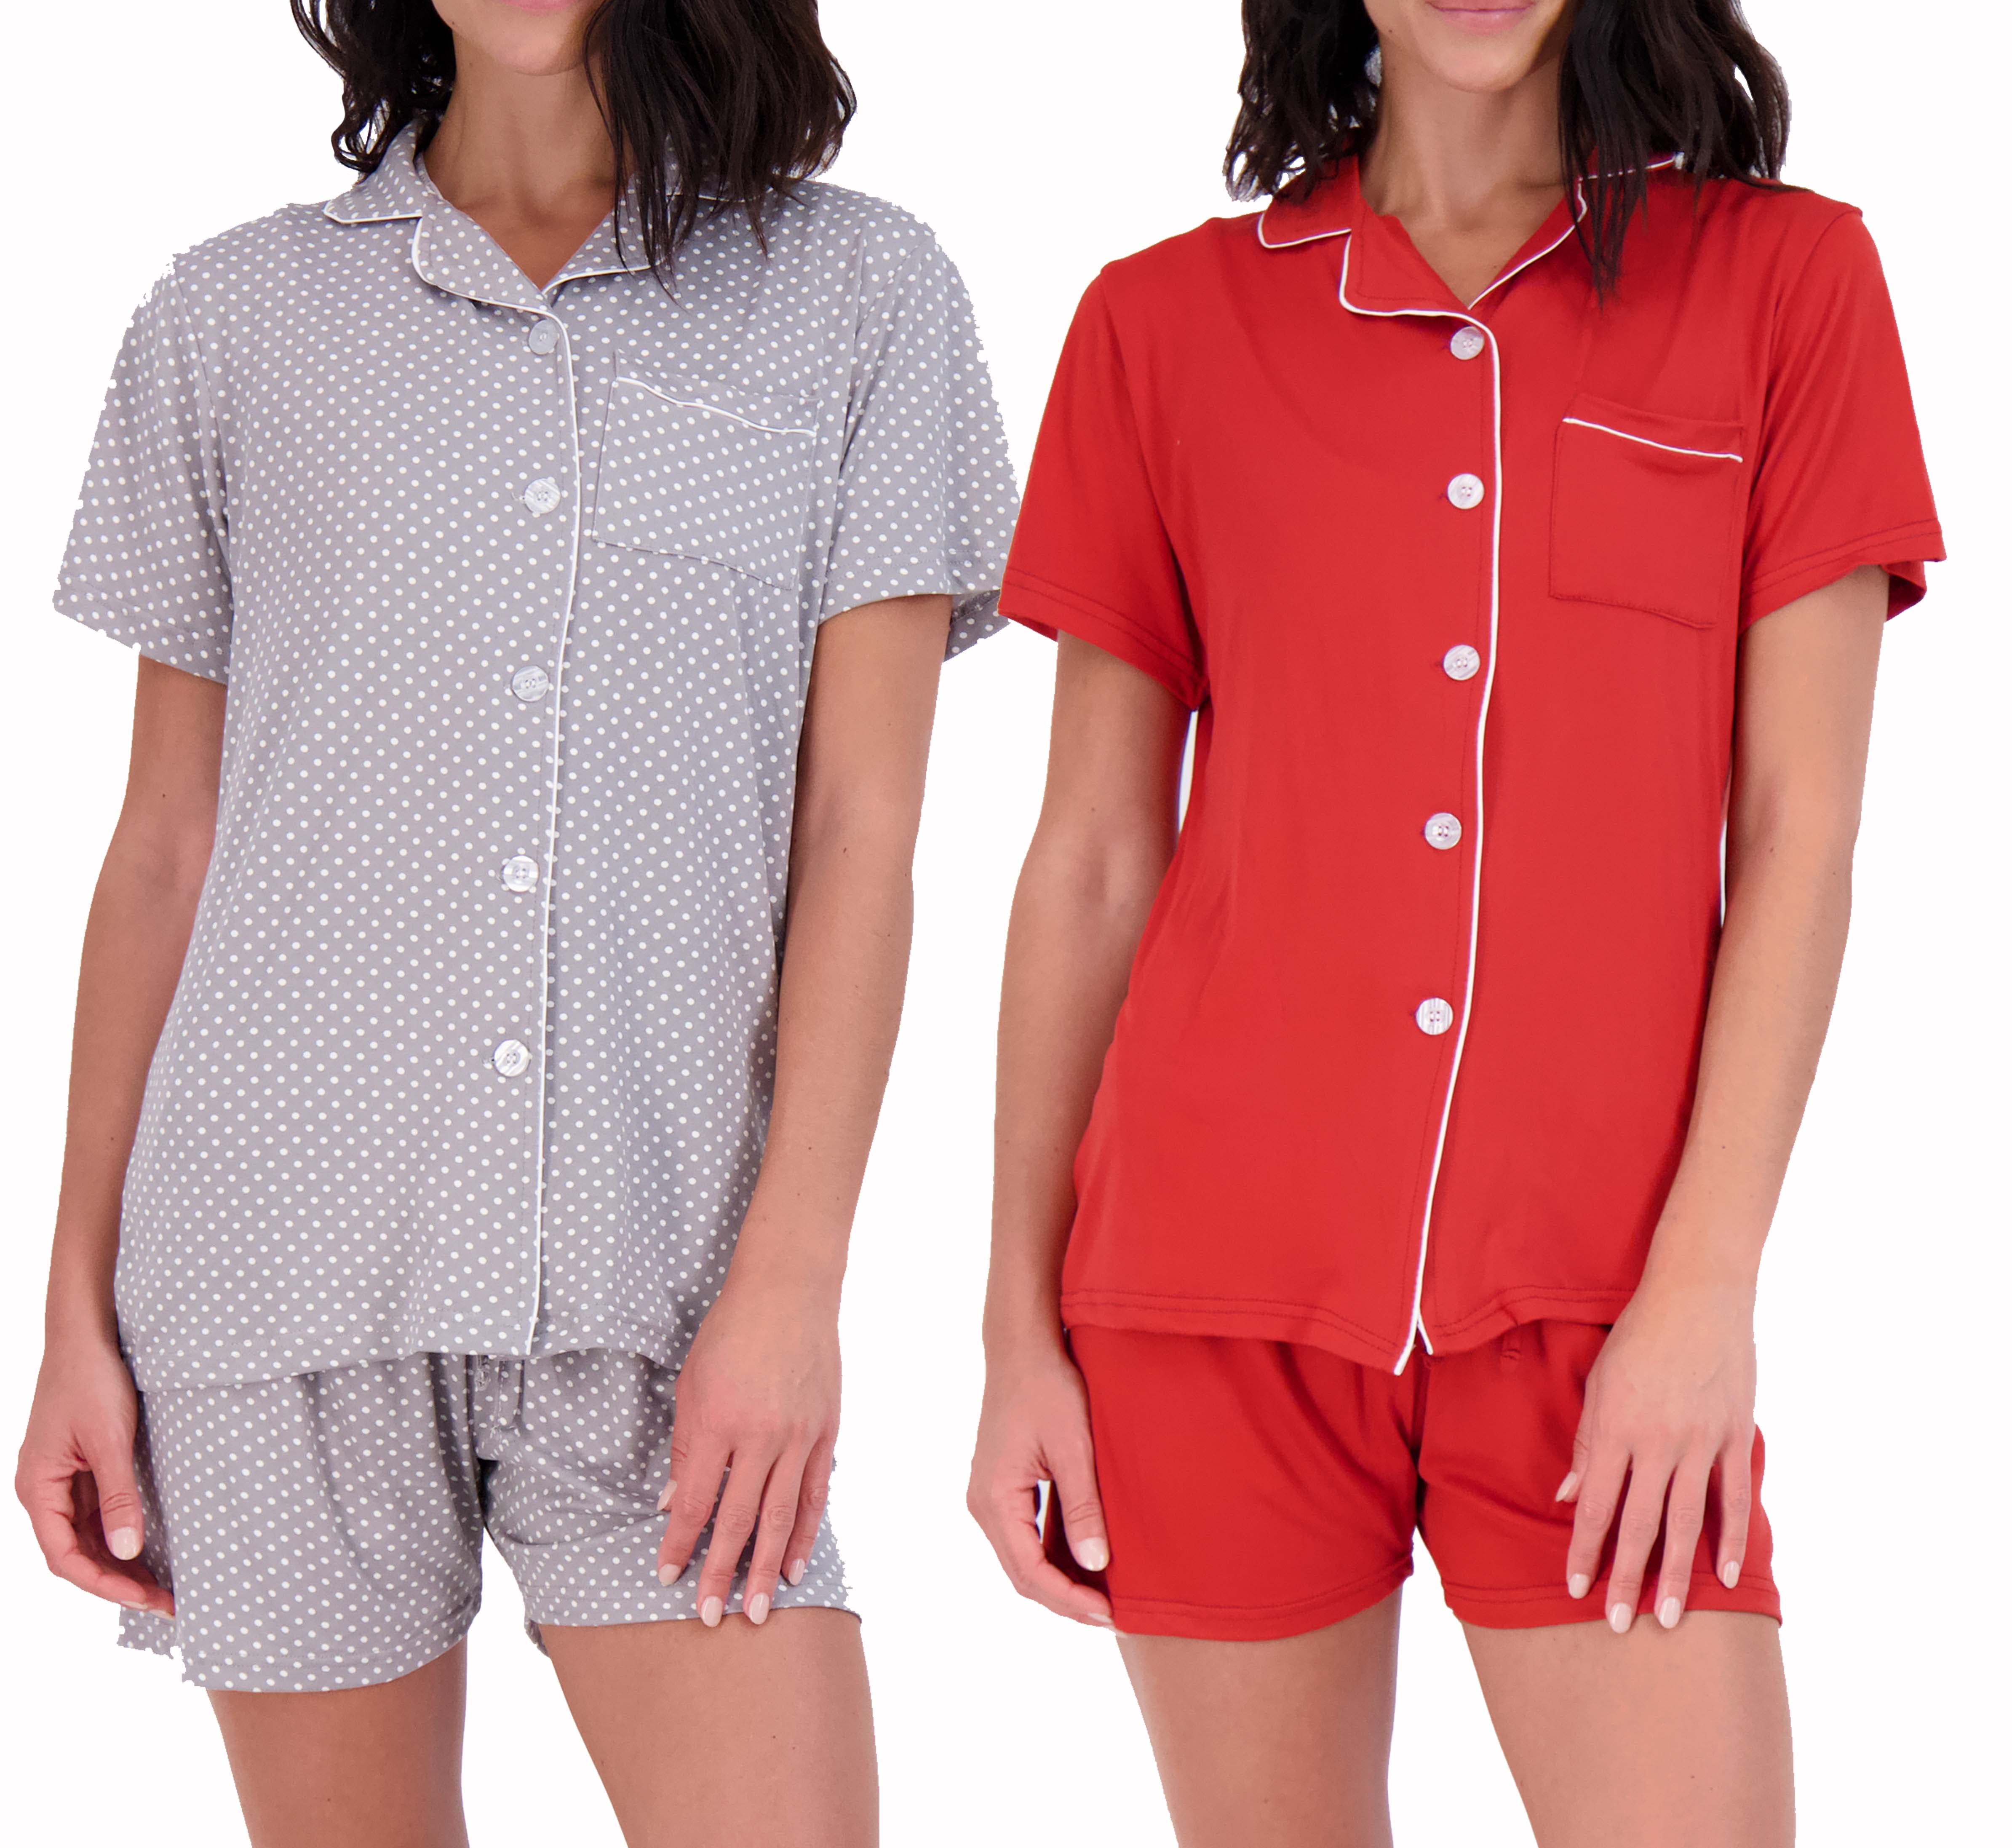 YAMTHR Summer Women Pajamas Set Long Sleeve Tops Elastic Drawstring Shorts Pant PJ Set 2 Piece Sleepwear Casual Nightwear